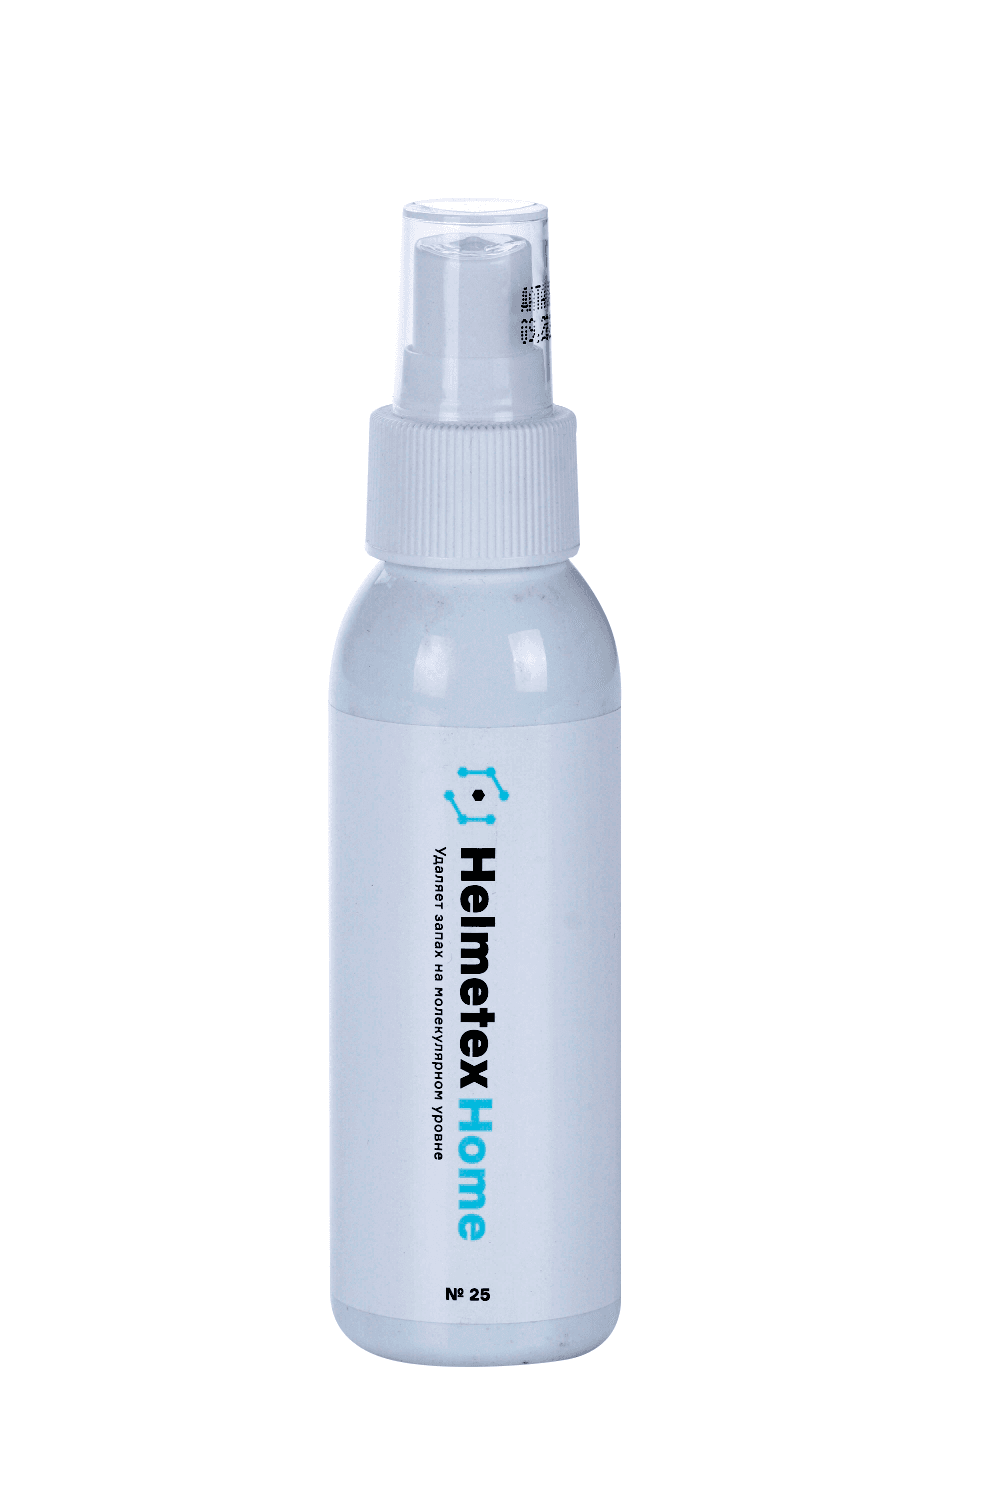 Нейтрализатор поглотитель запаха Helmetex Home 25 с ароматом лаванда